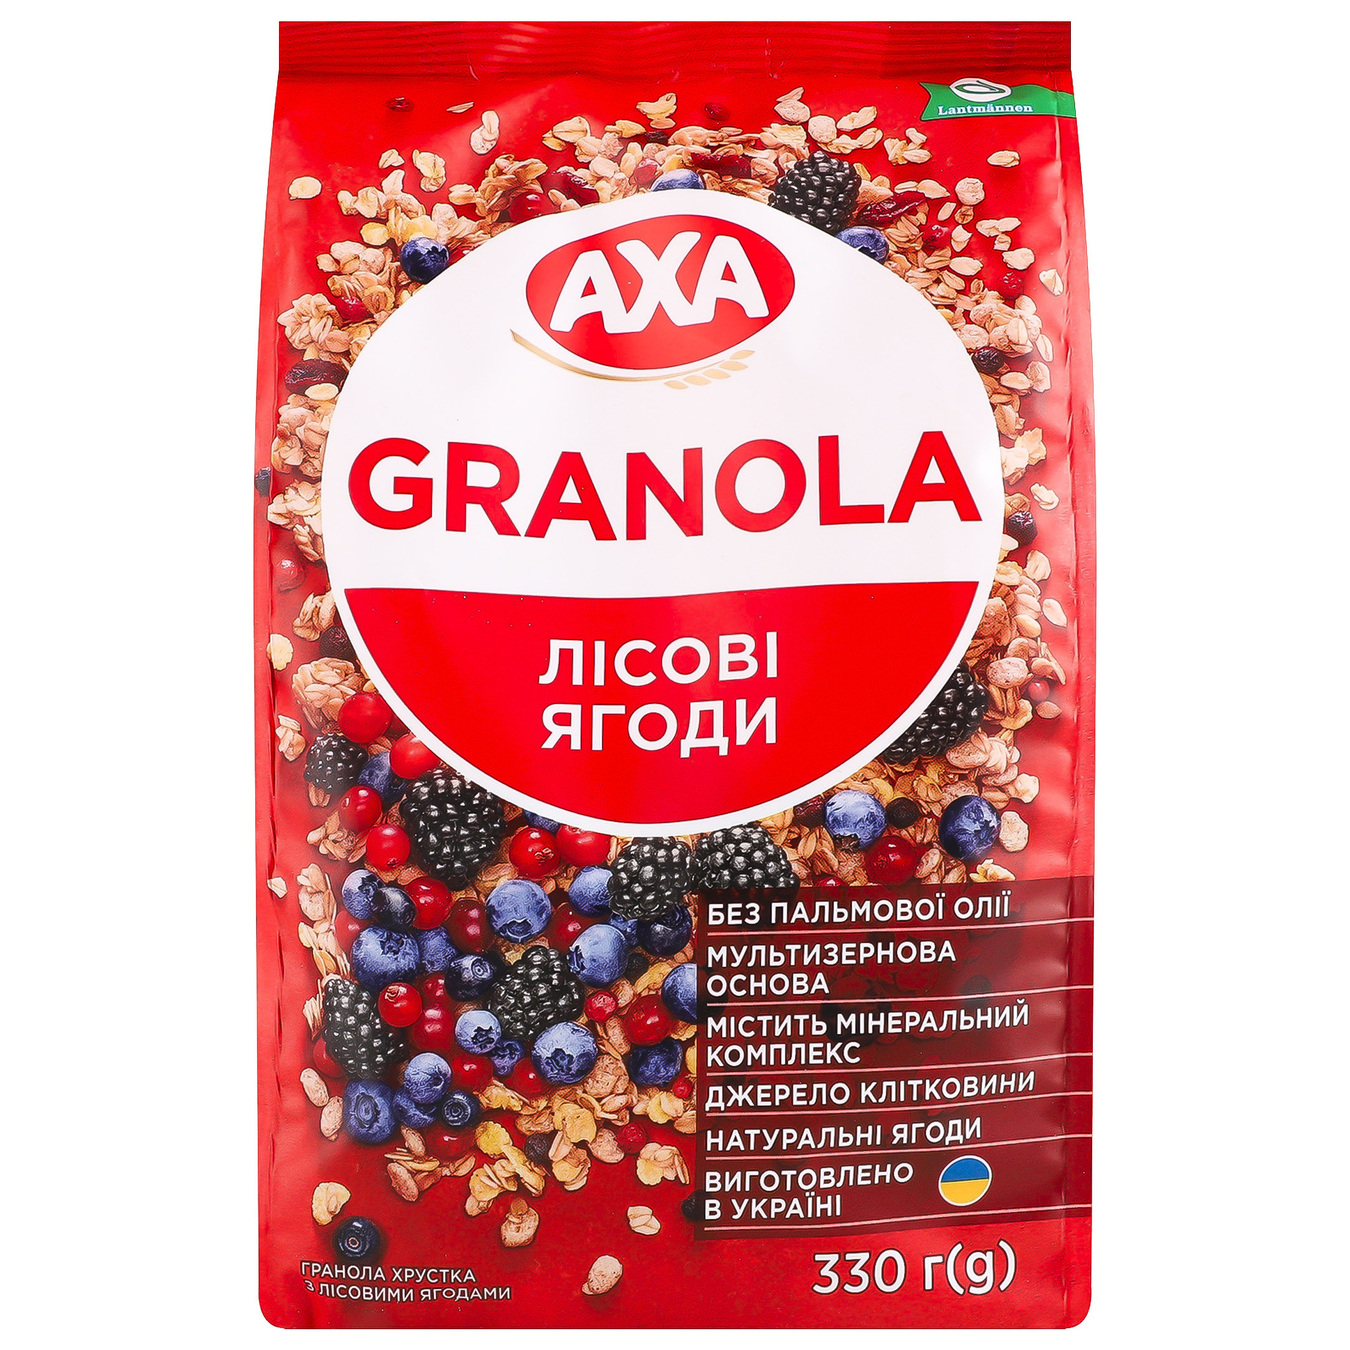 Akha crunchy granola with wild berries 330g